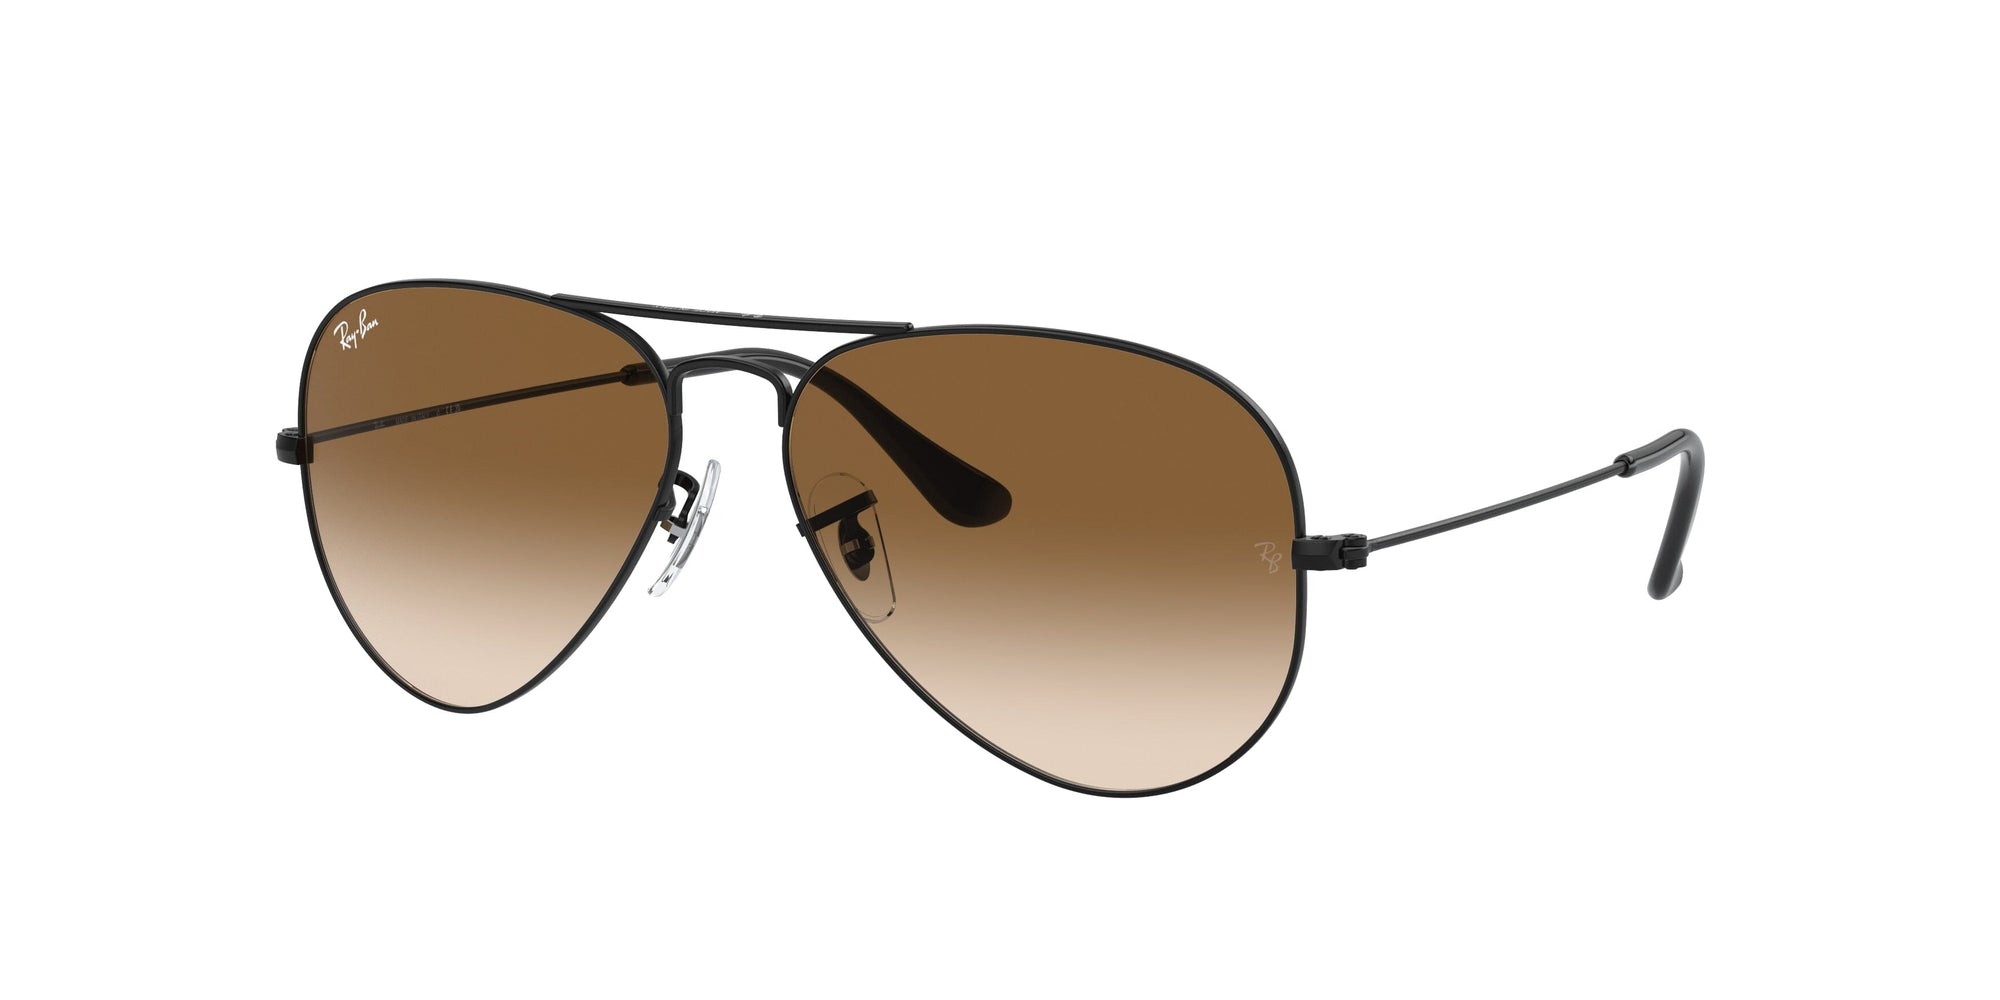 RAY-BAN Aviator Large Black - Brown Gradient Sunglasses Sunglasses Ray-Ban 